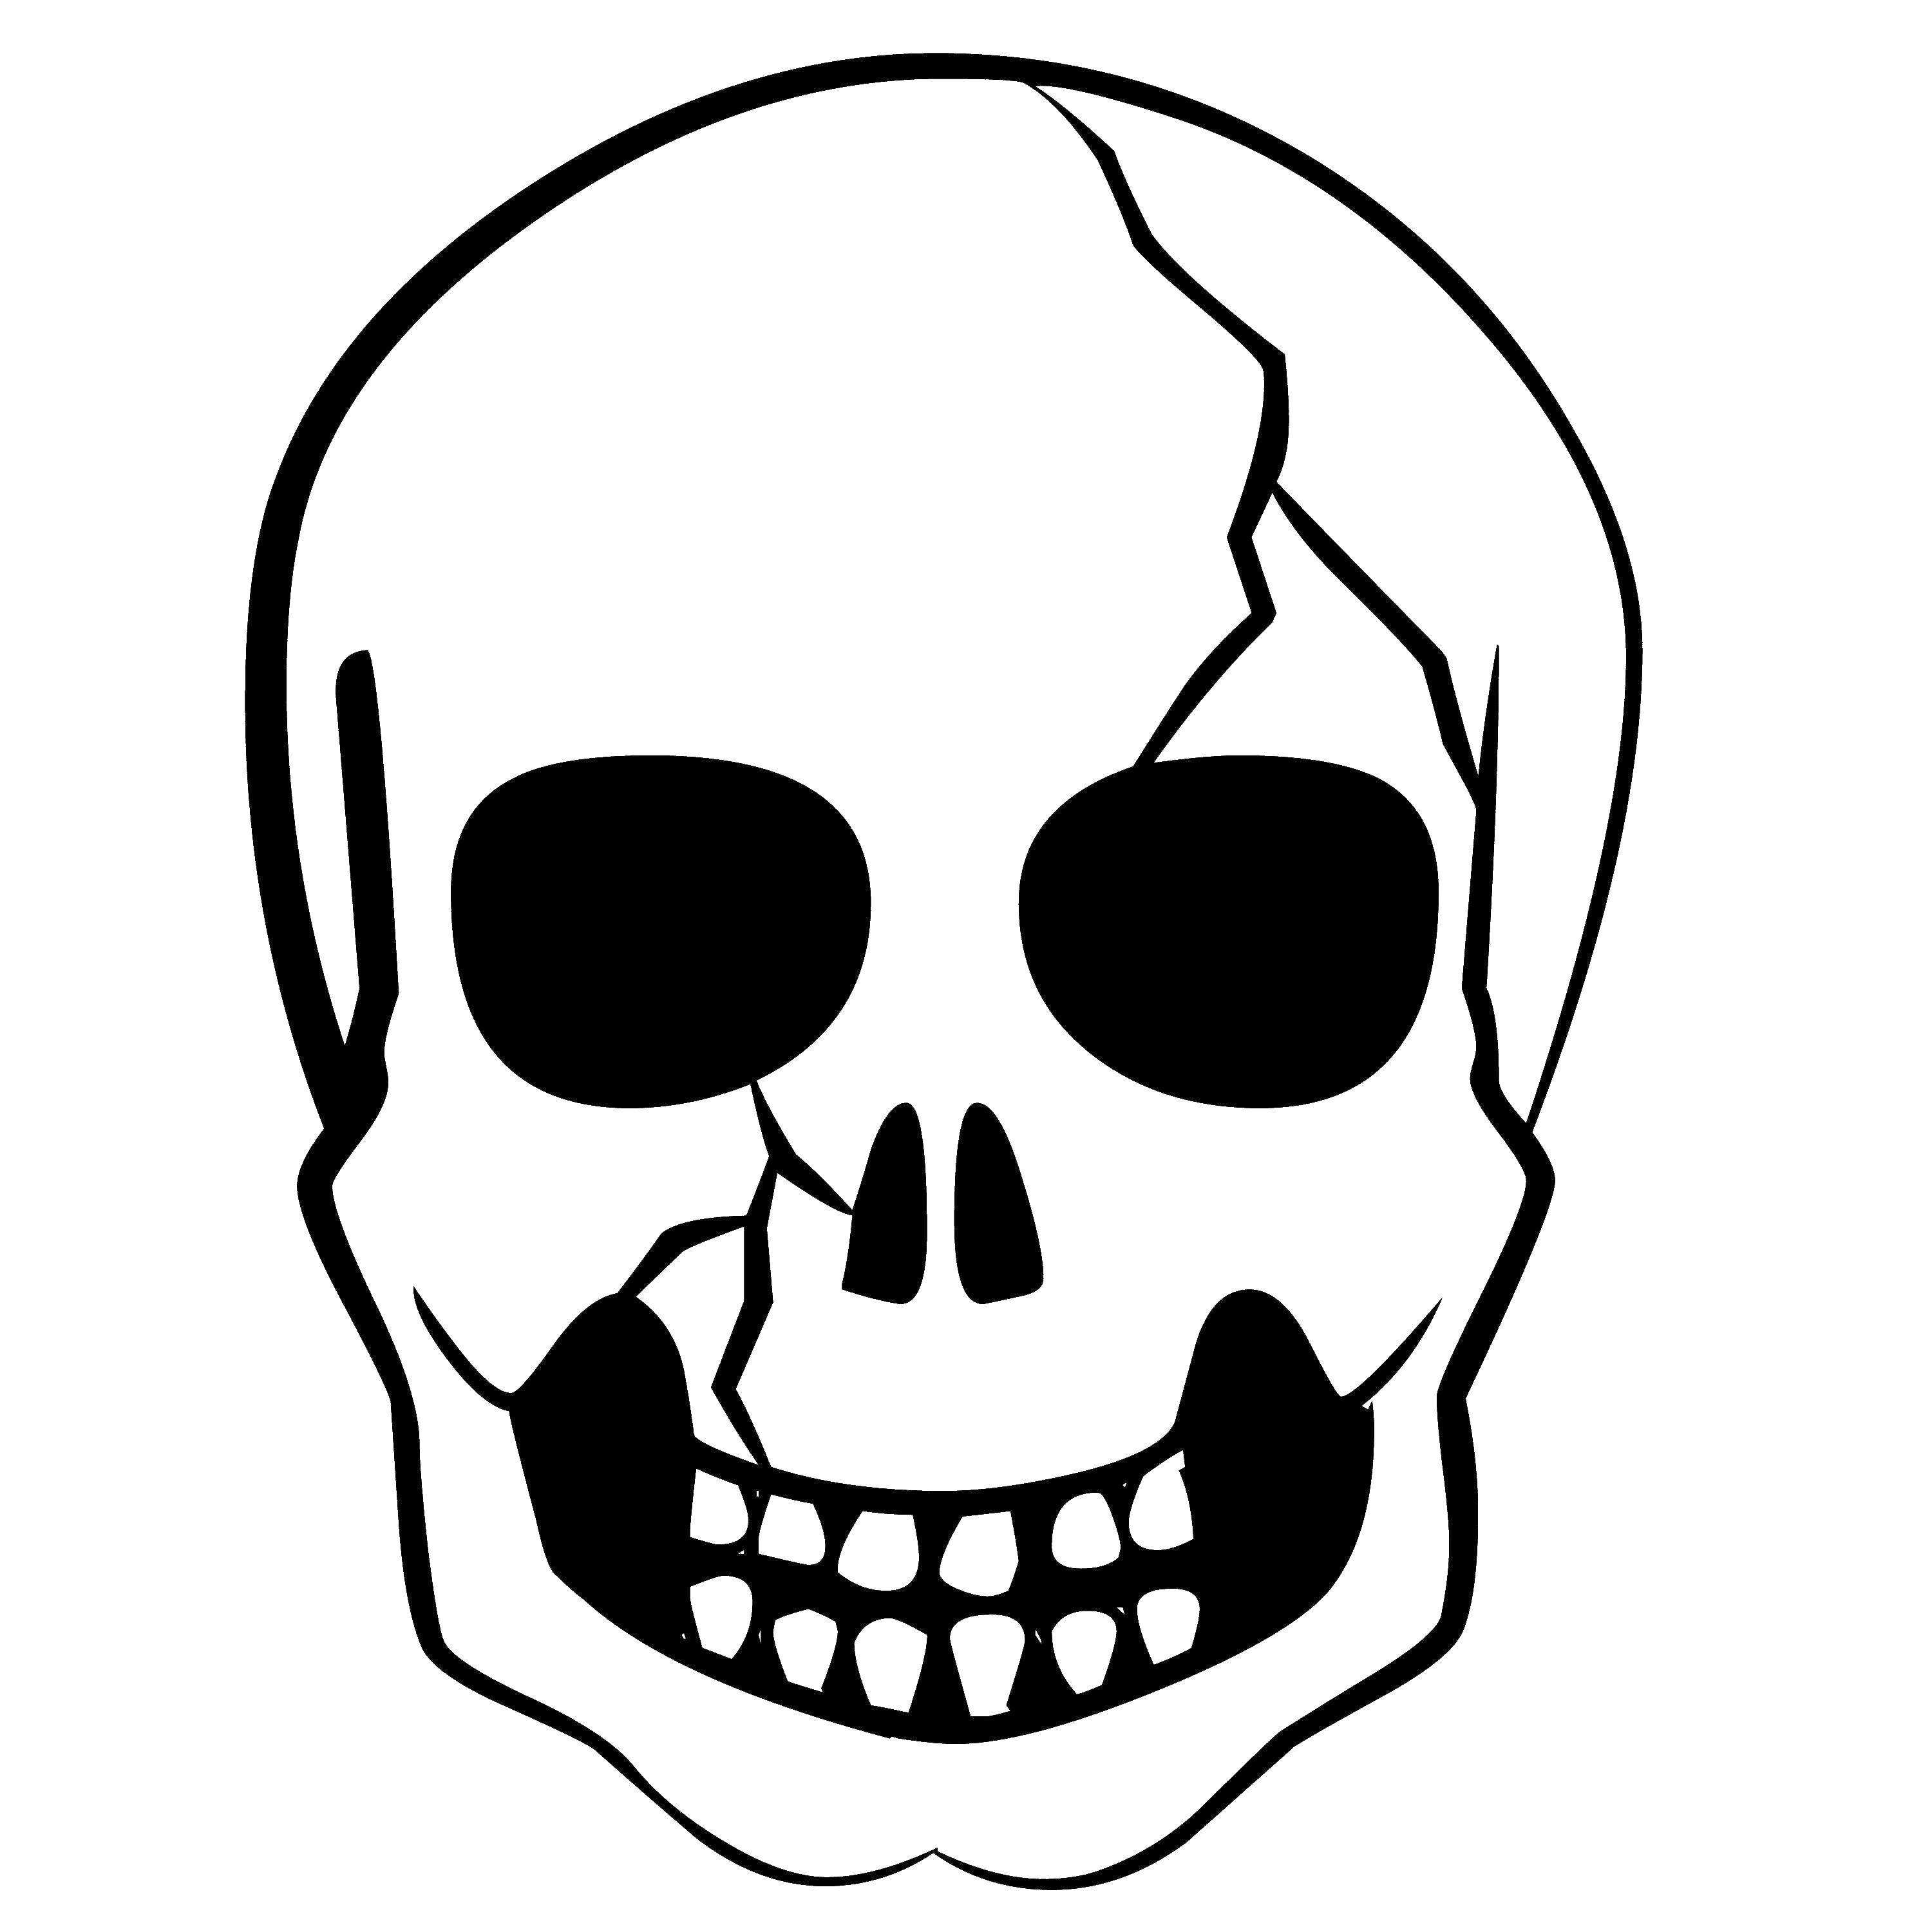 Coloring Skull cracked. Category Skull. Tags:  skull, cracked.